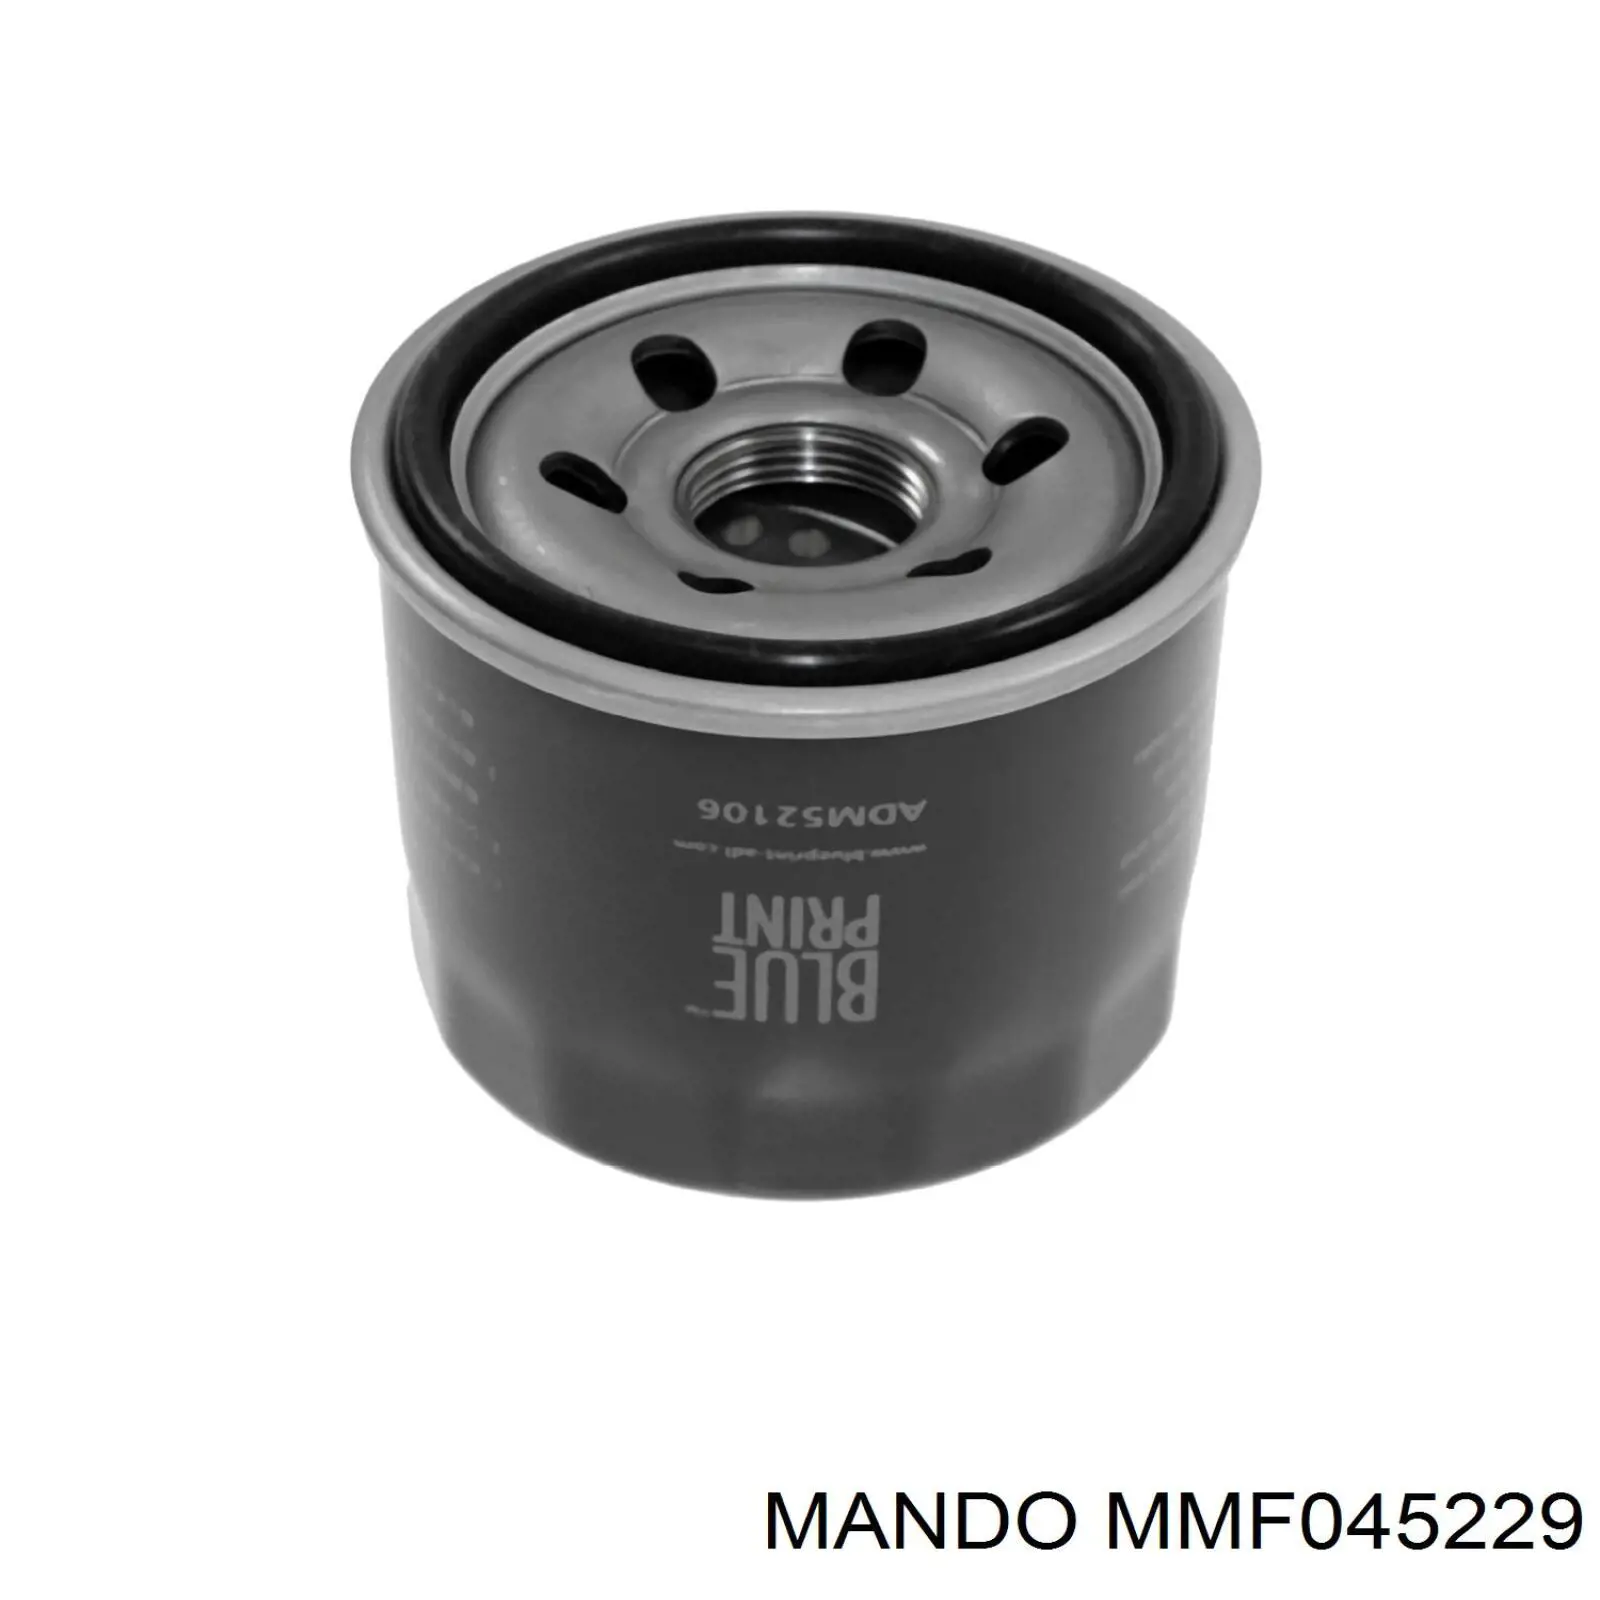 MMF045229 Mando масляный фильтр